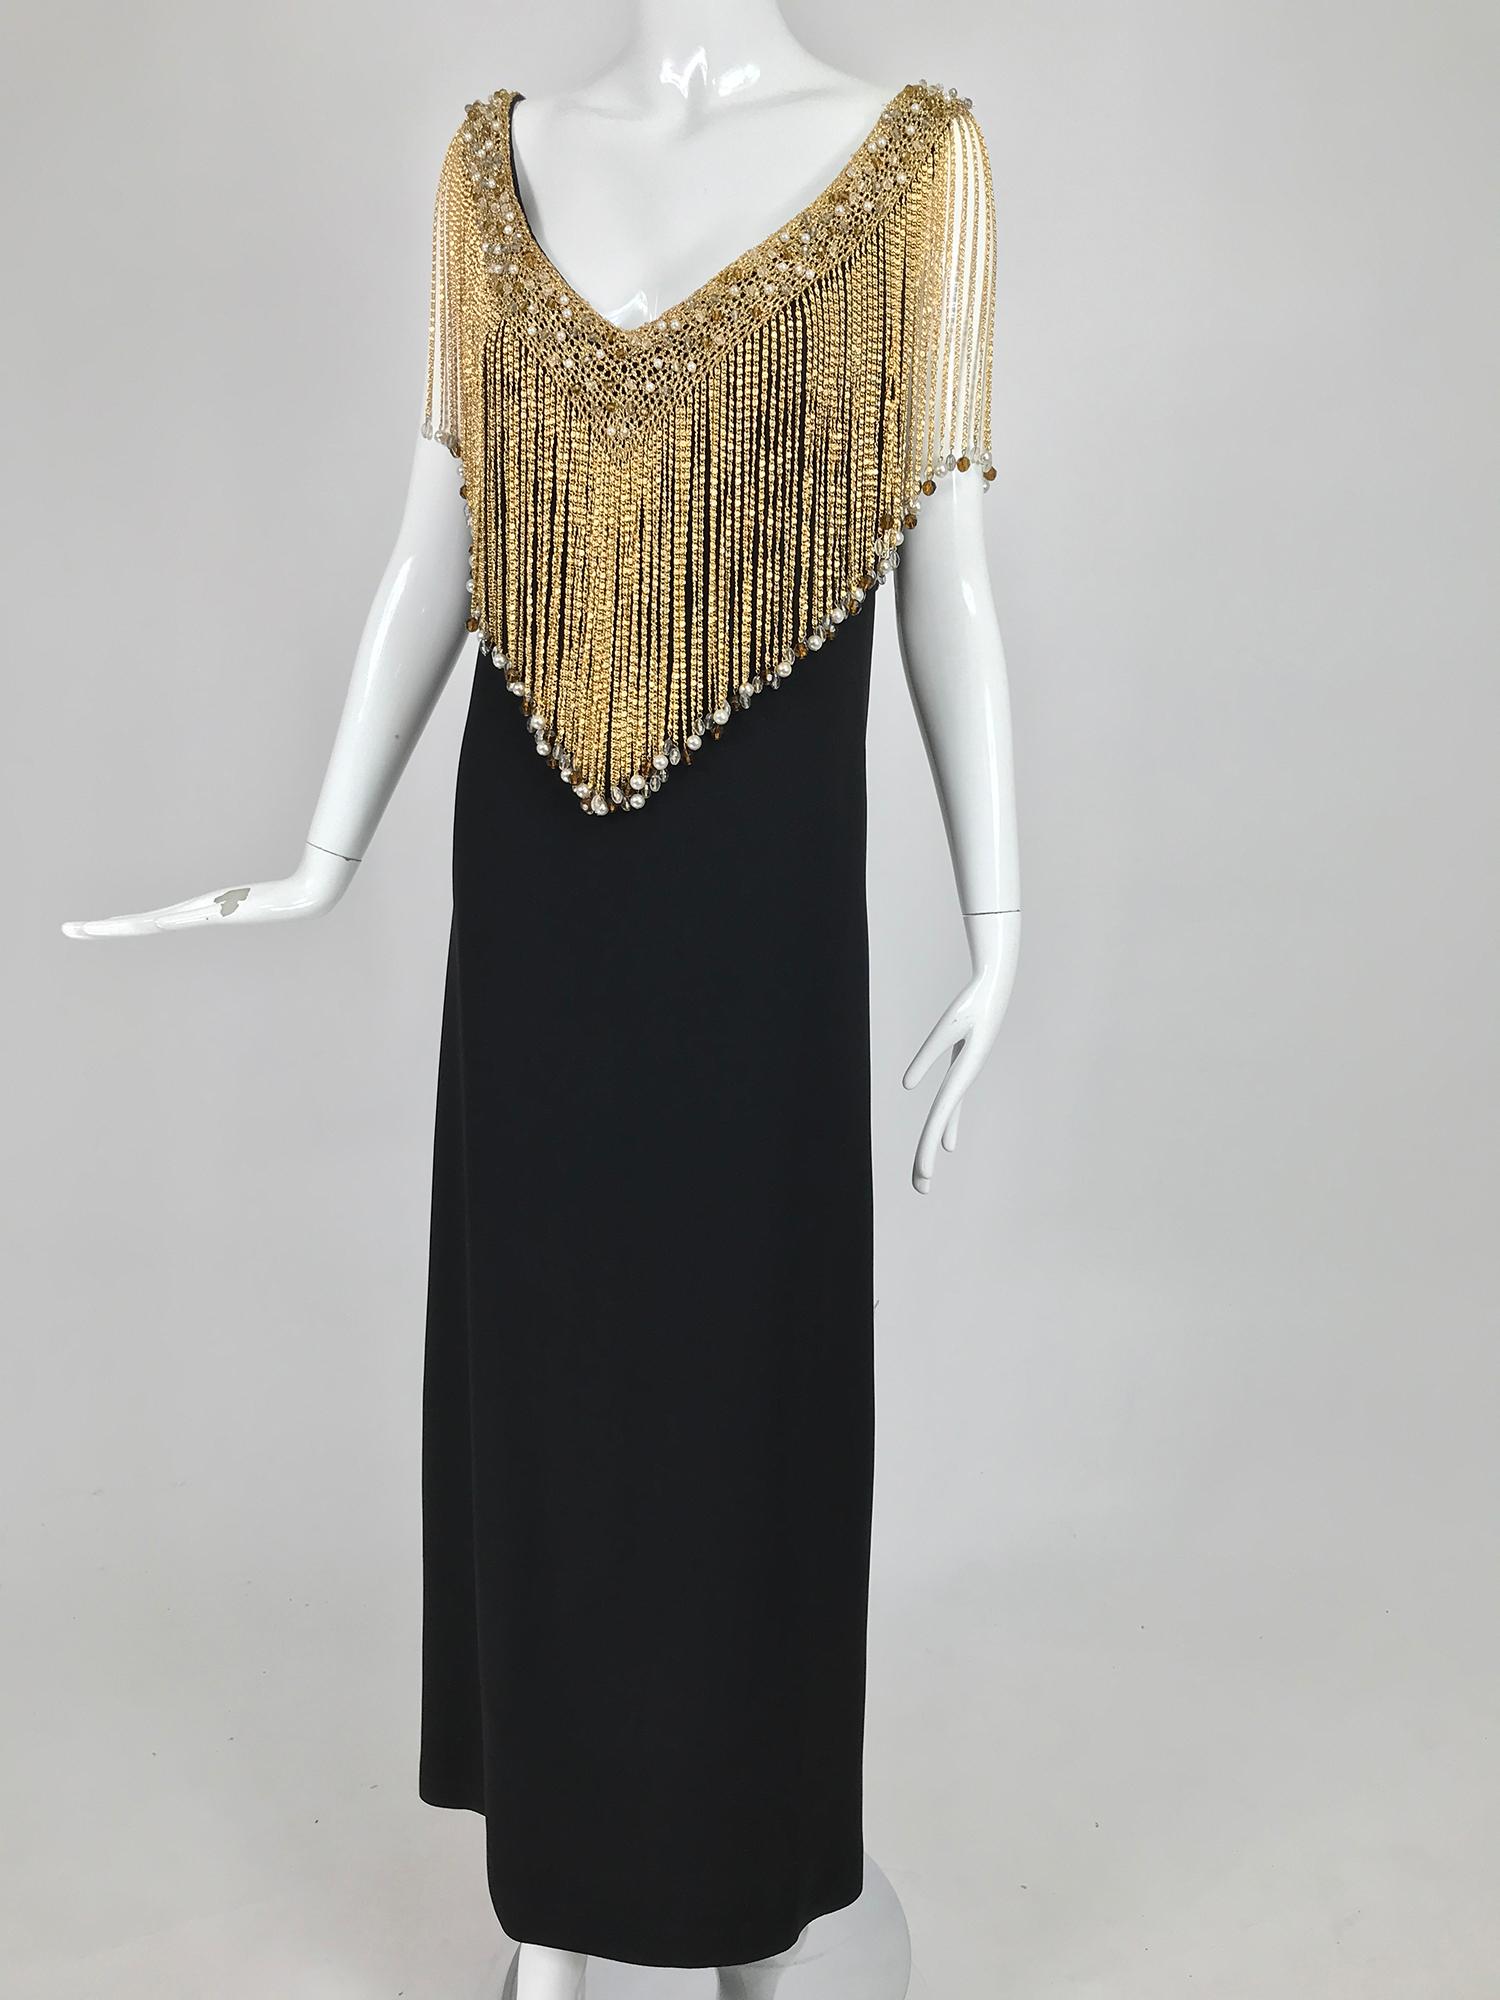 Loris Azzaro Couture Gold Chain Fringe Collar Black Maxi Dress 1970s 4